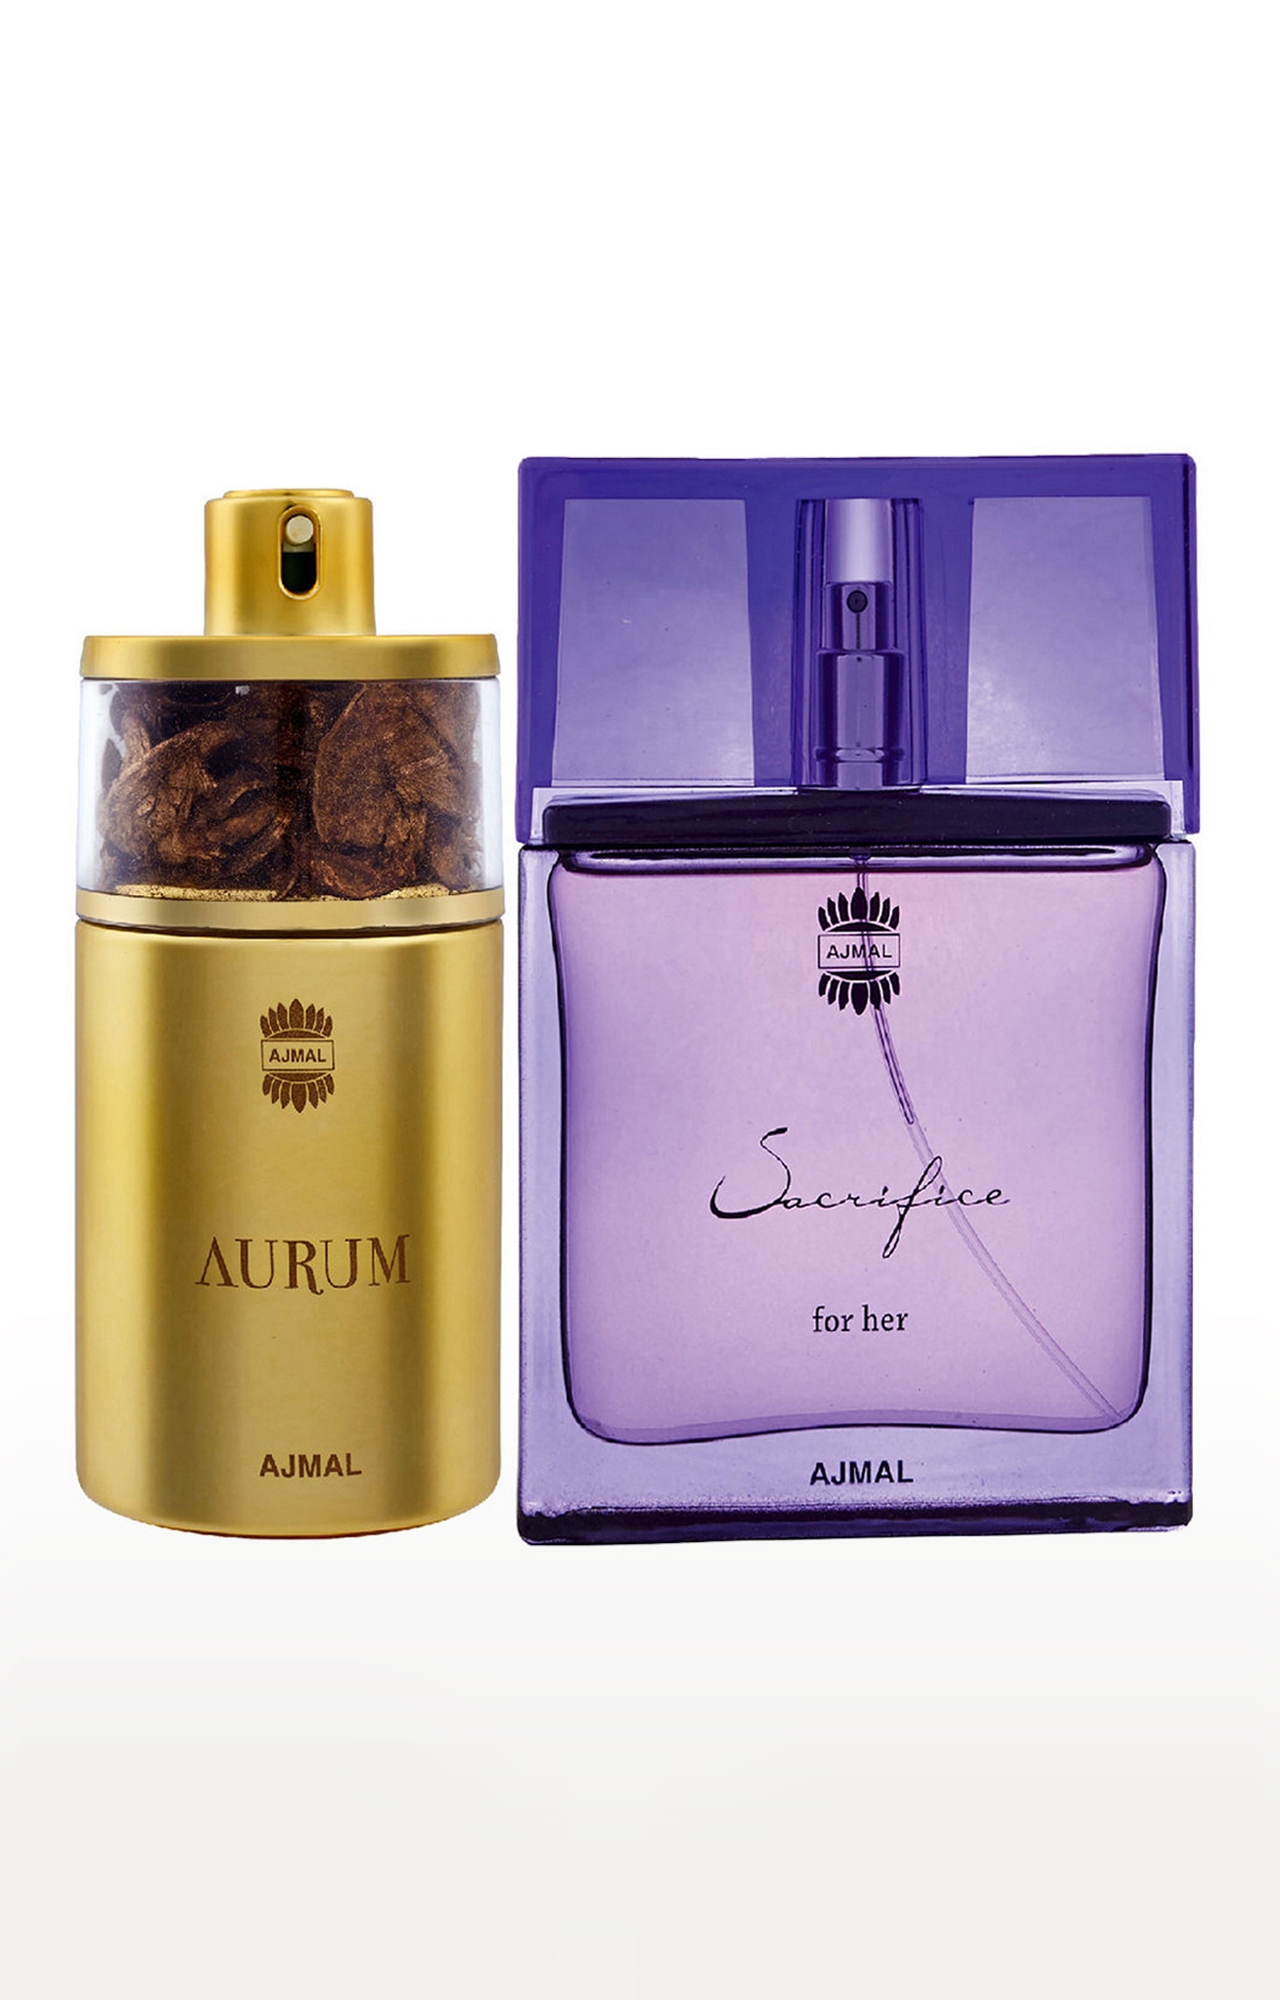 Ajmal Aurum EDP Fruity Perfume 75ml for Women and Sacrifice for HER EDP Musky Perfume 50ml for Women